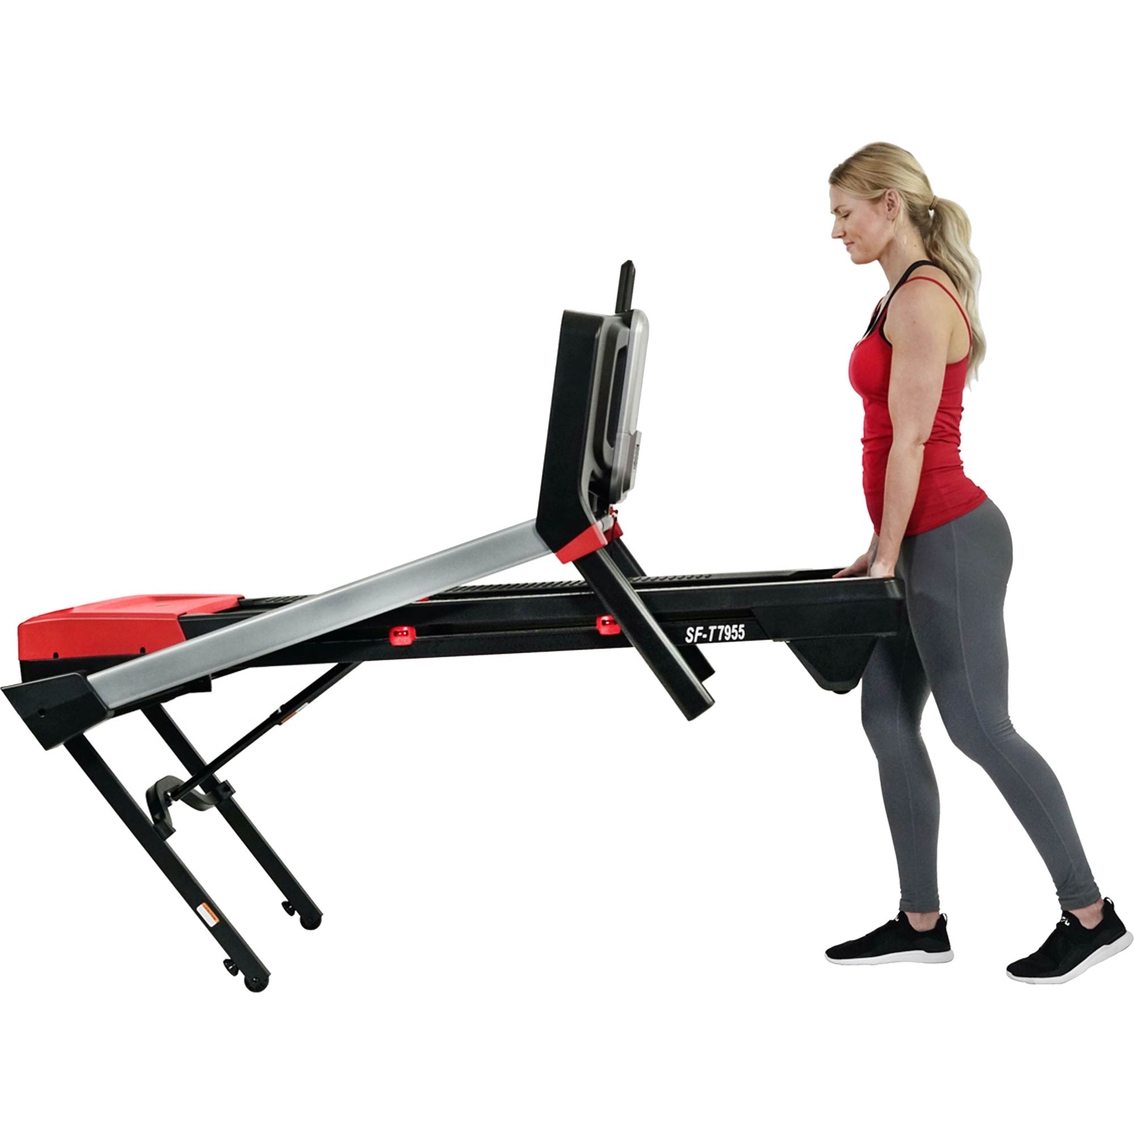 Sunny Health & Fitness Evo-fit Incline Treadmill